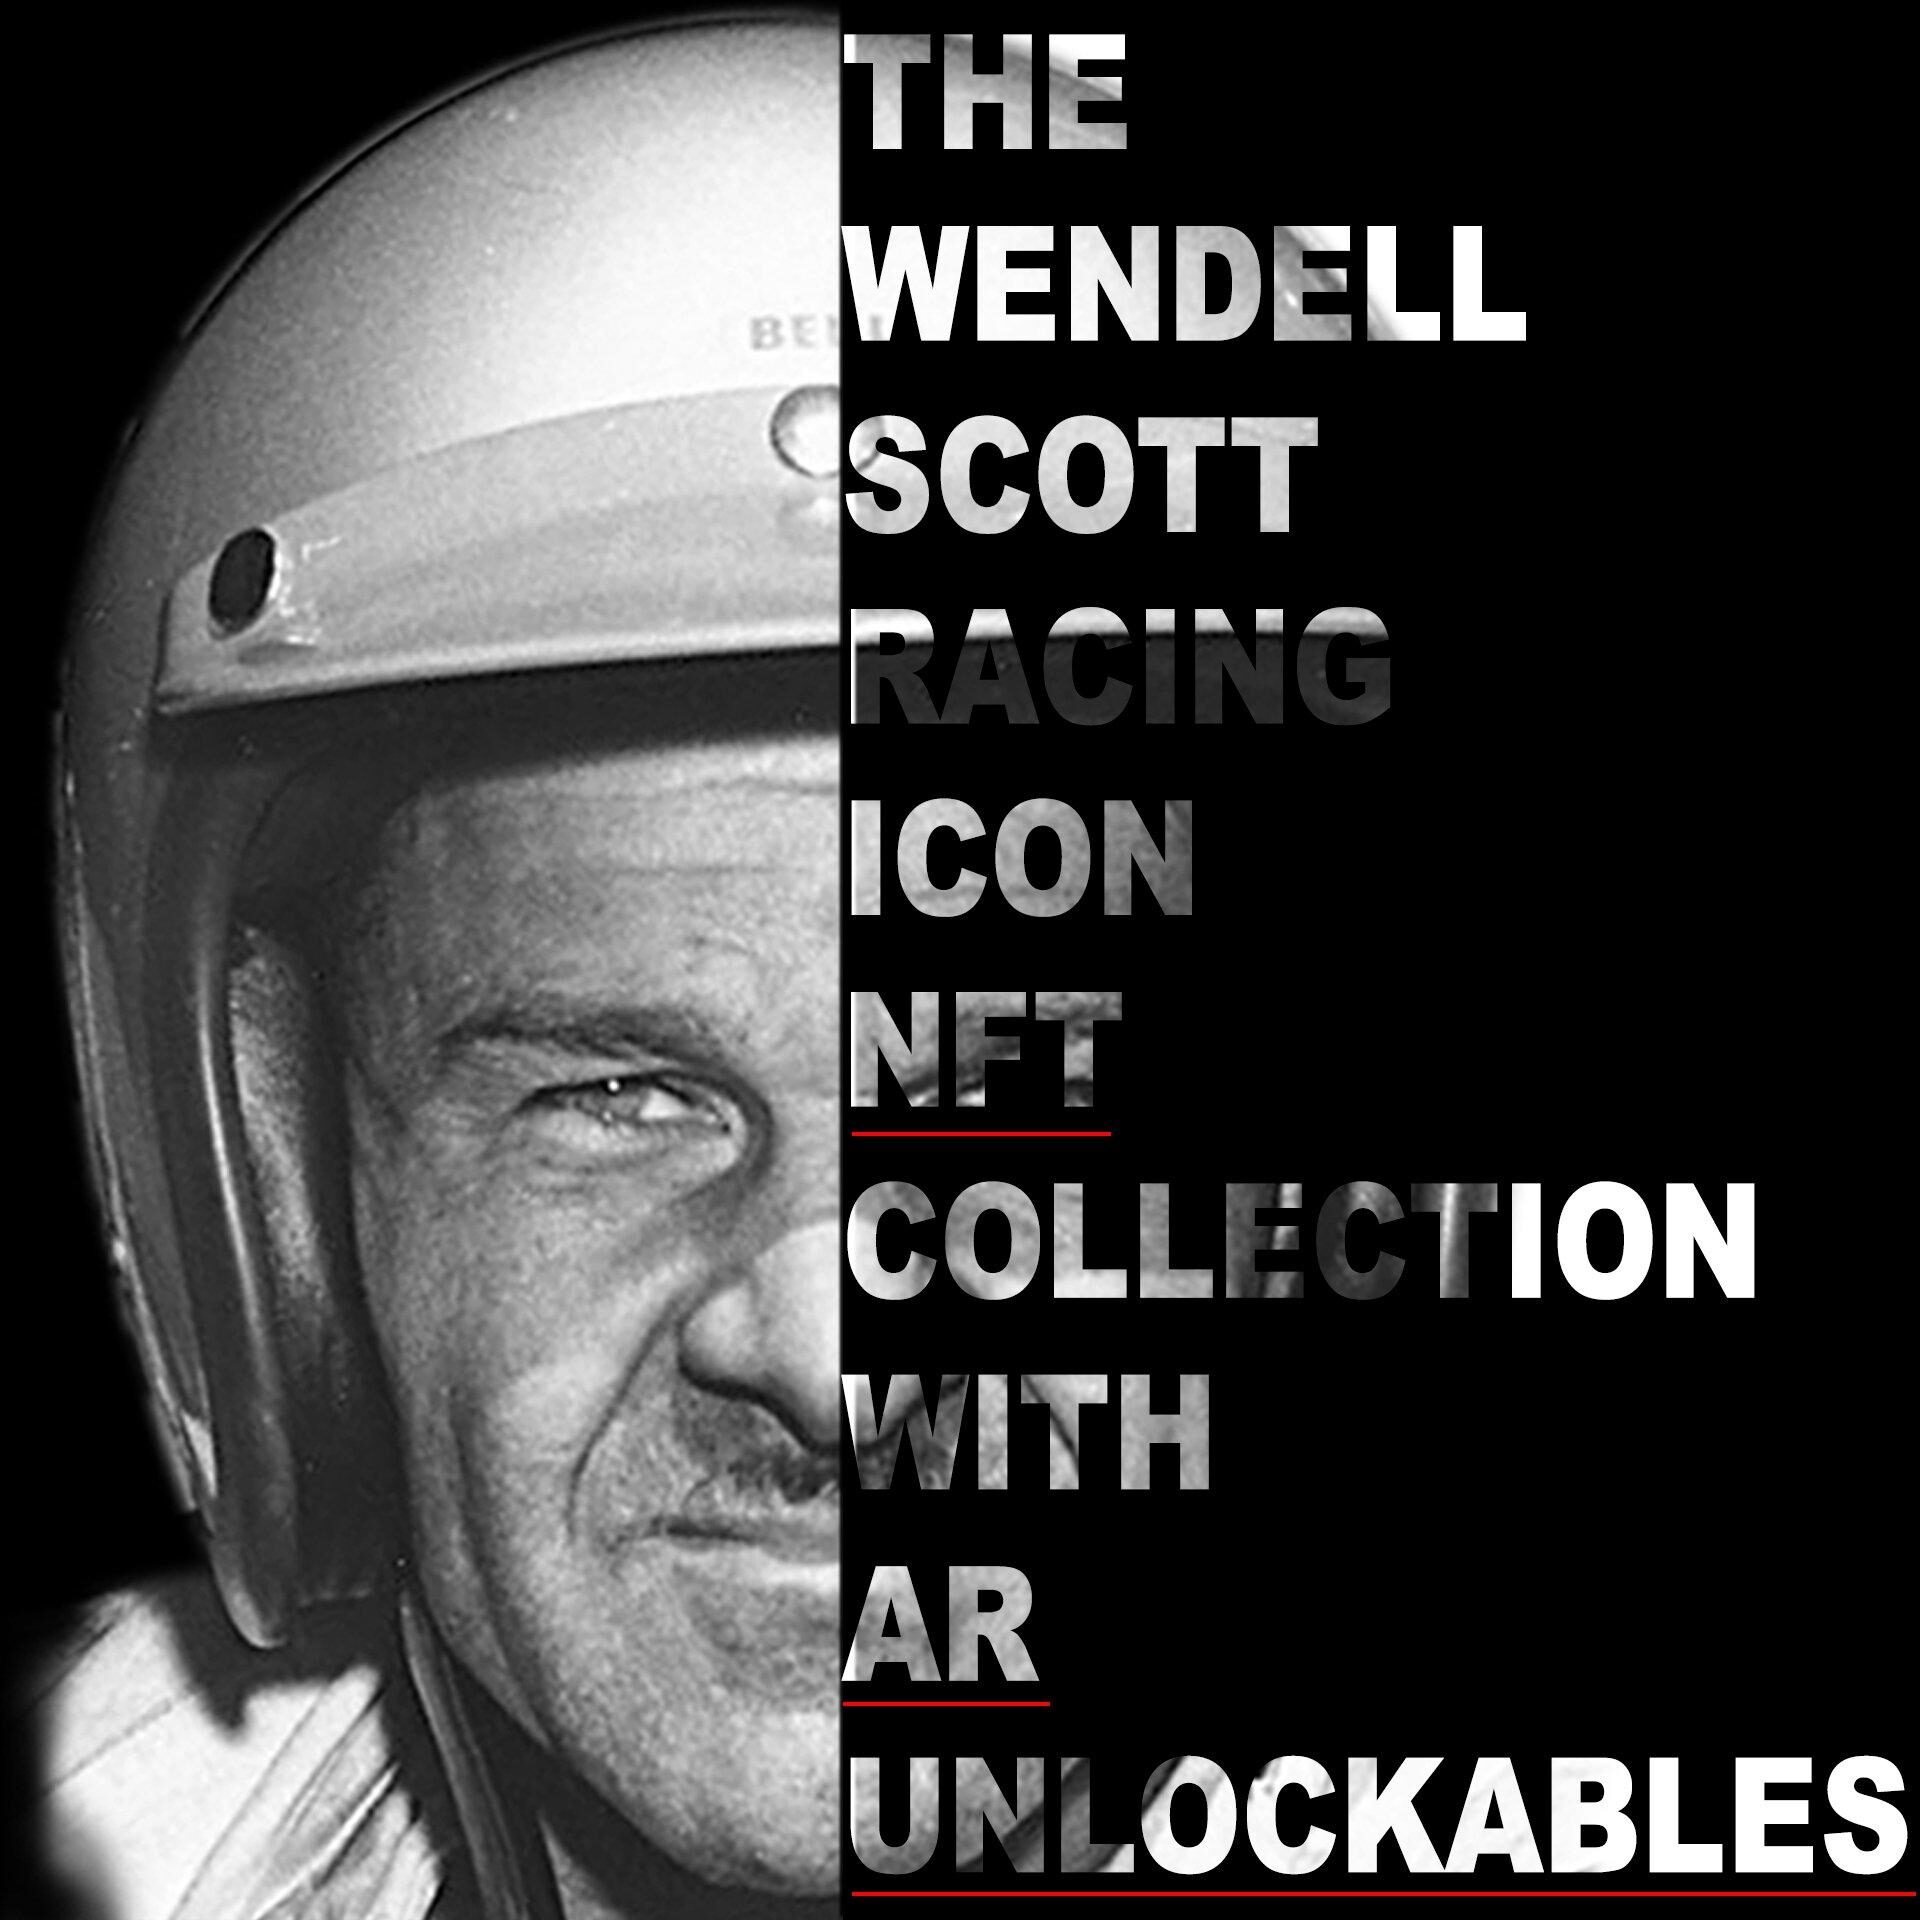 Affiche représentant l'icône NASCAR Wendell Scott